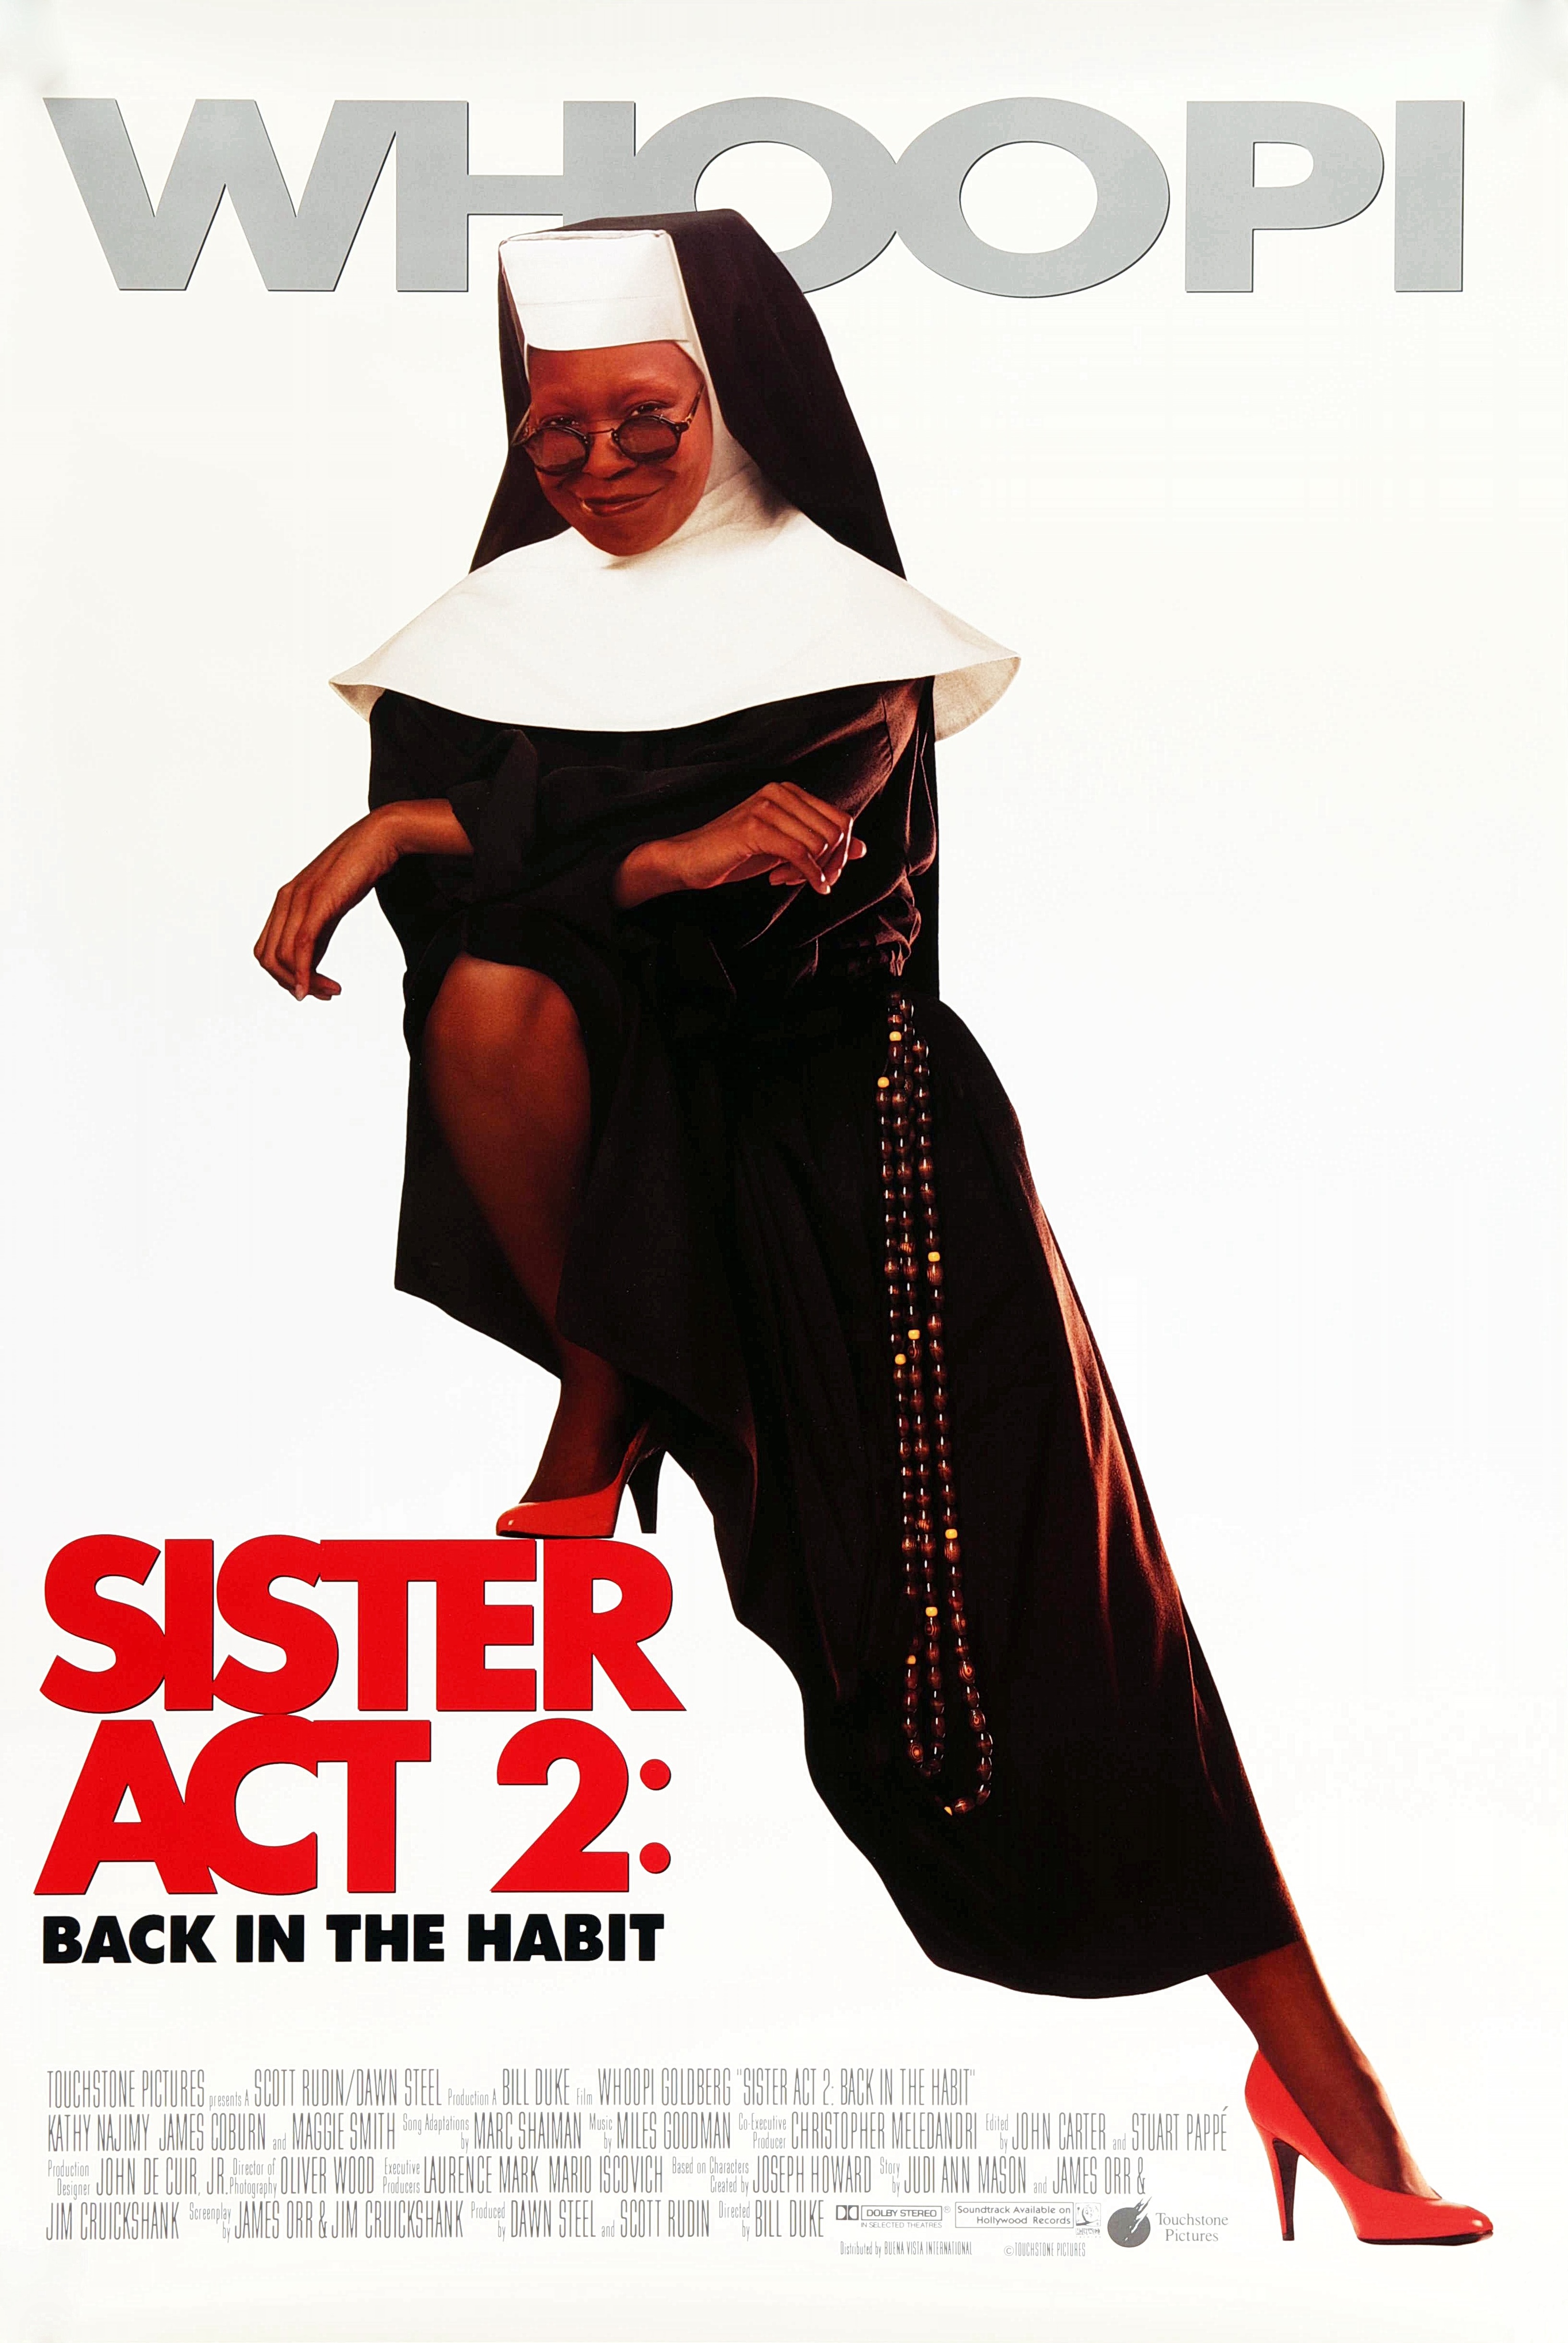 Nonton film Sister Act 2 Back in the Habit layarkaca21 indoxx1 ganool online streaming terbaru